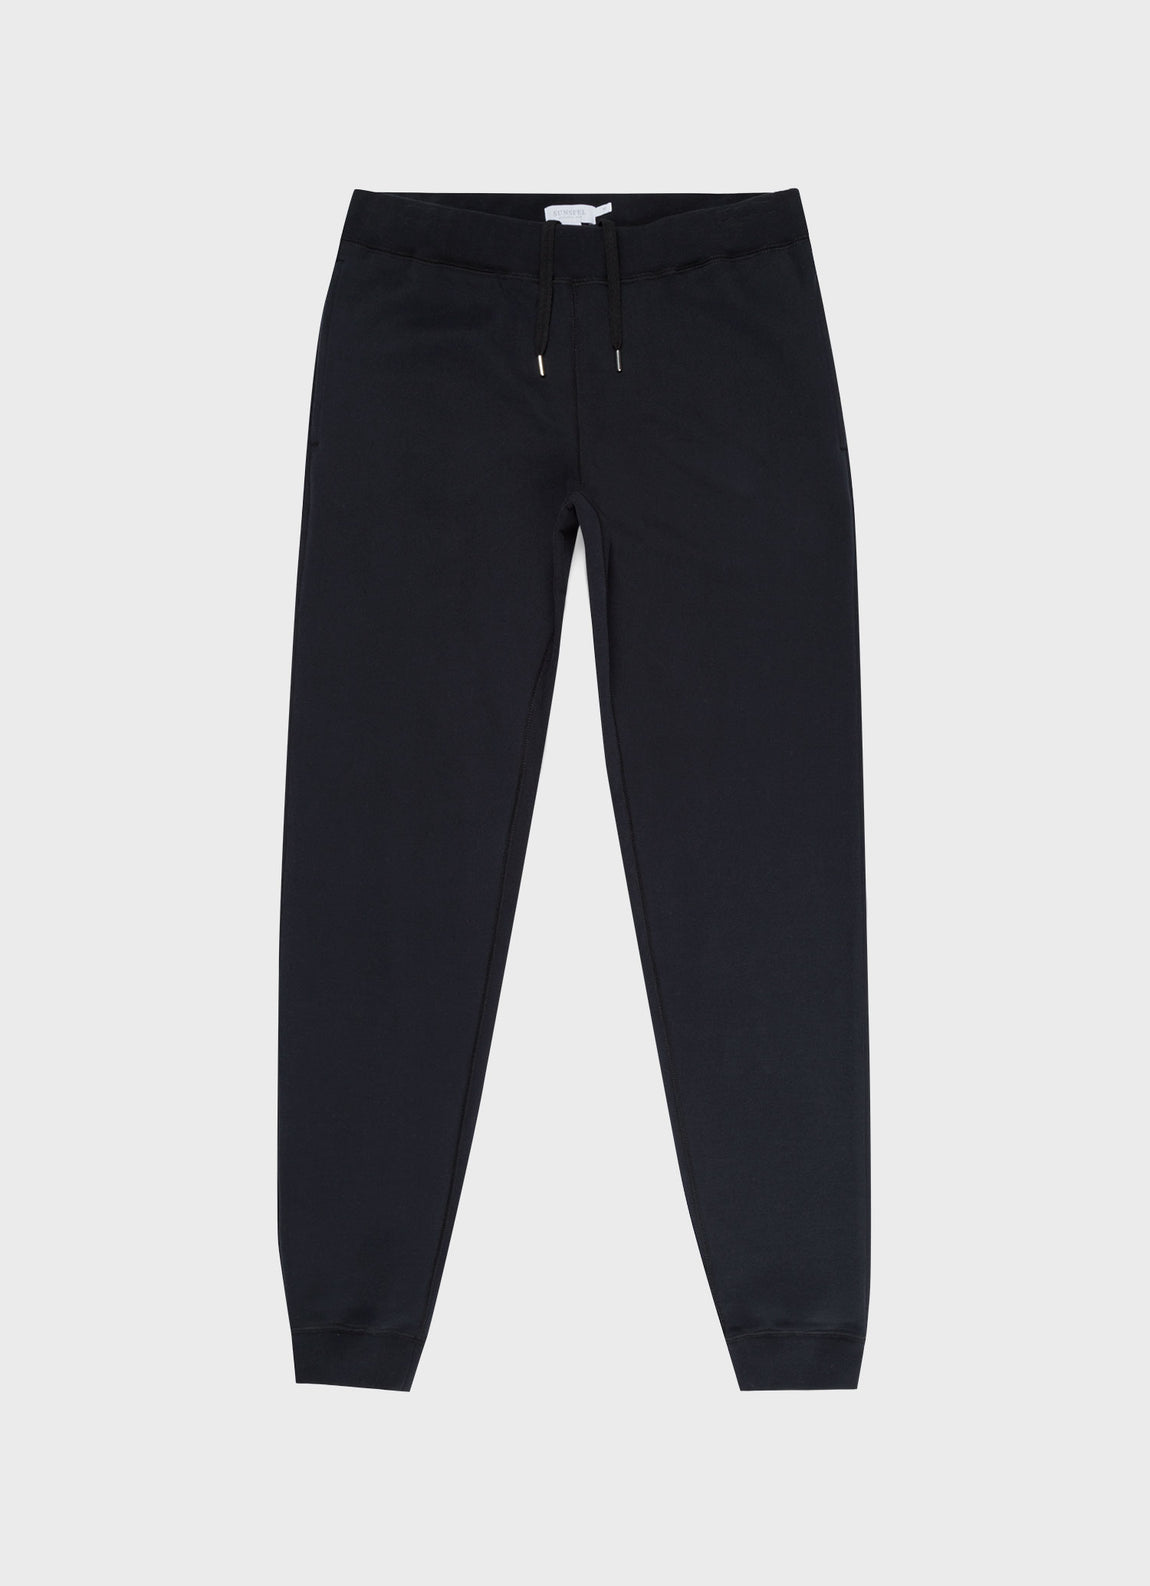 Men's Loopback Sweatpants in Black